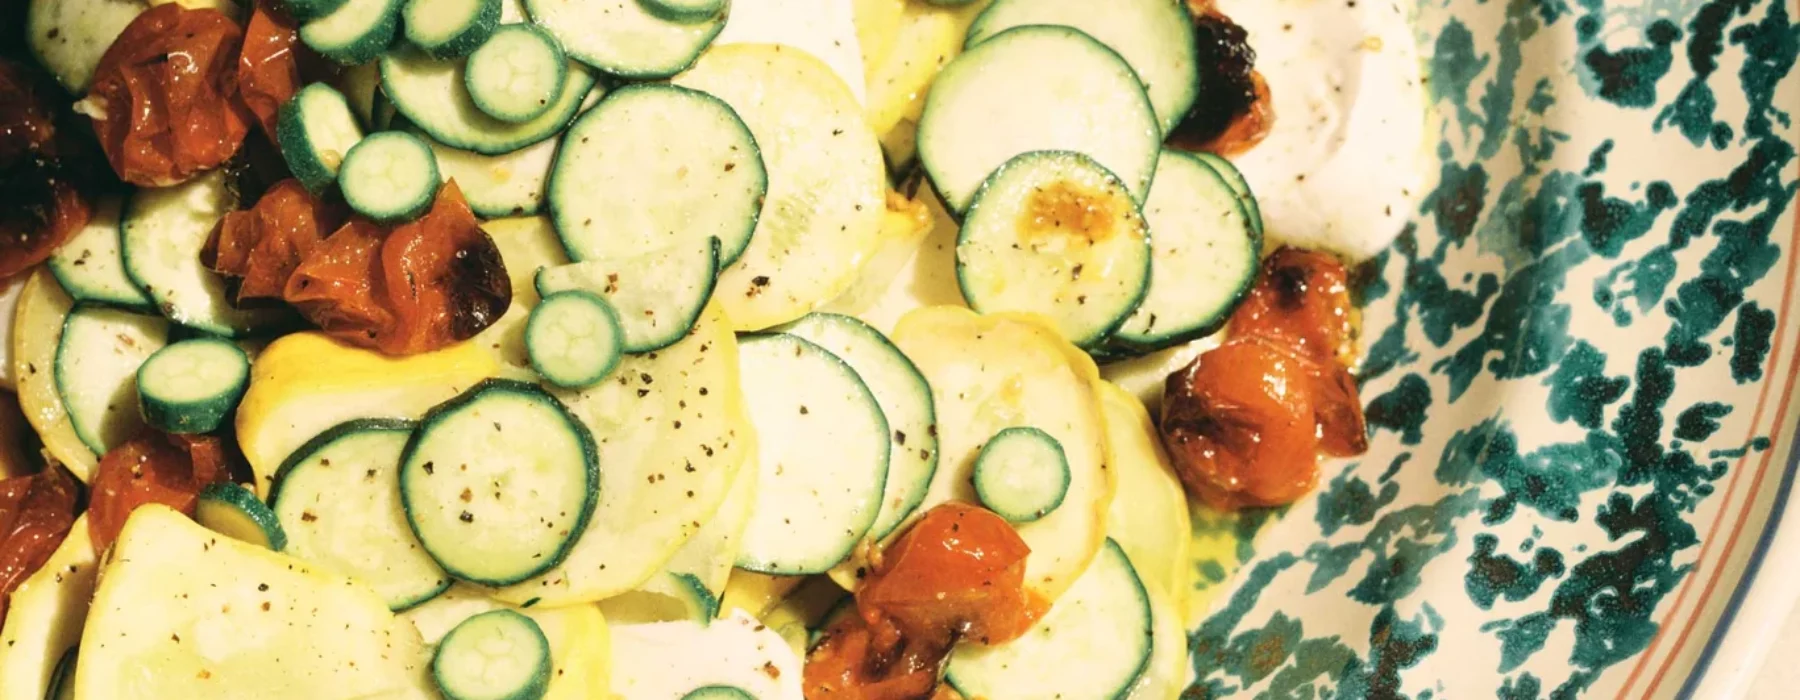 Bento Box Salad: A Quick Guide - Shrink That Footprint